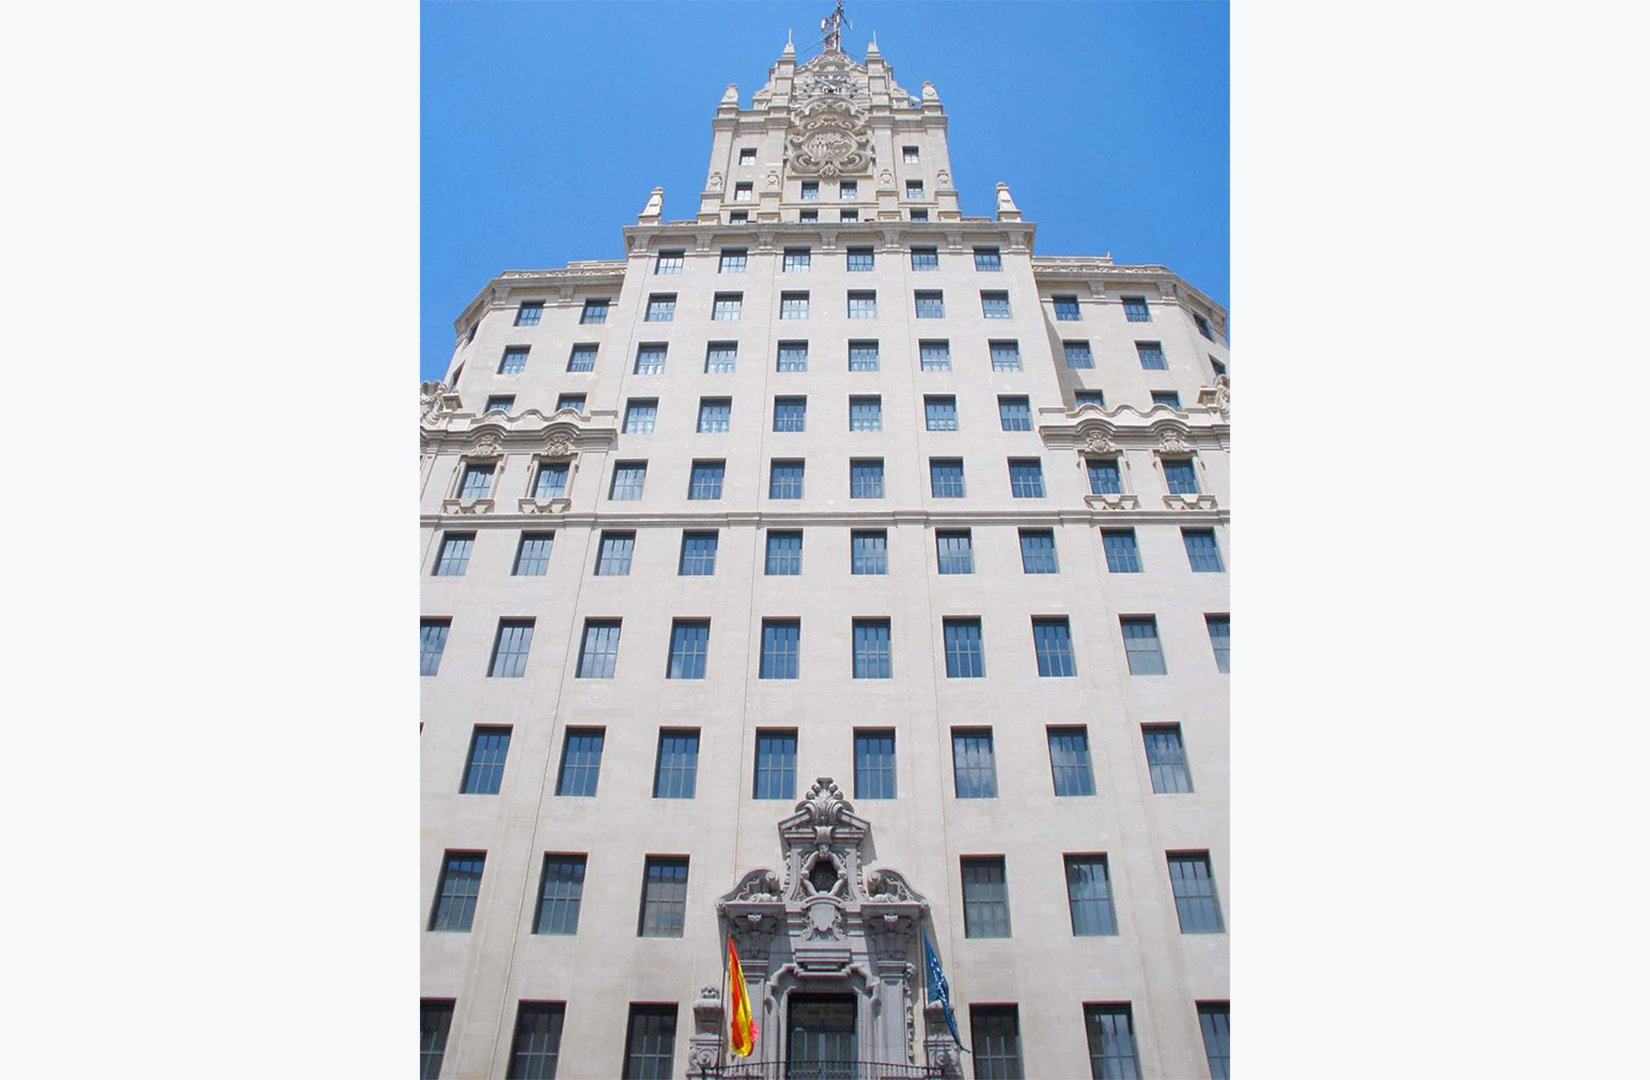 Telefonica Building Madrid